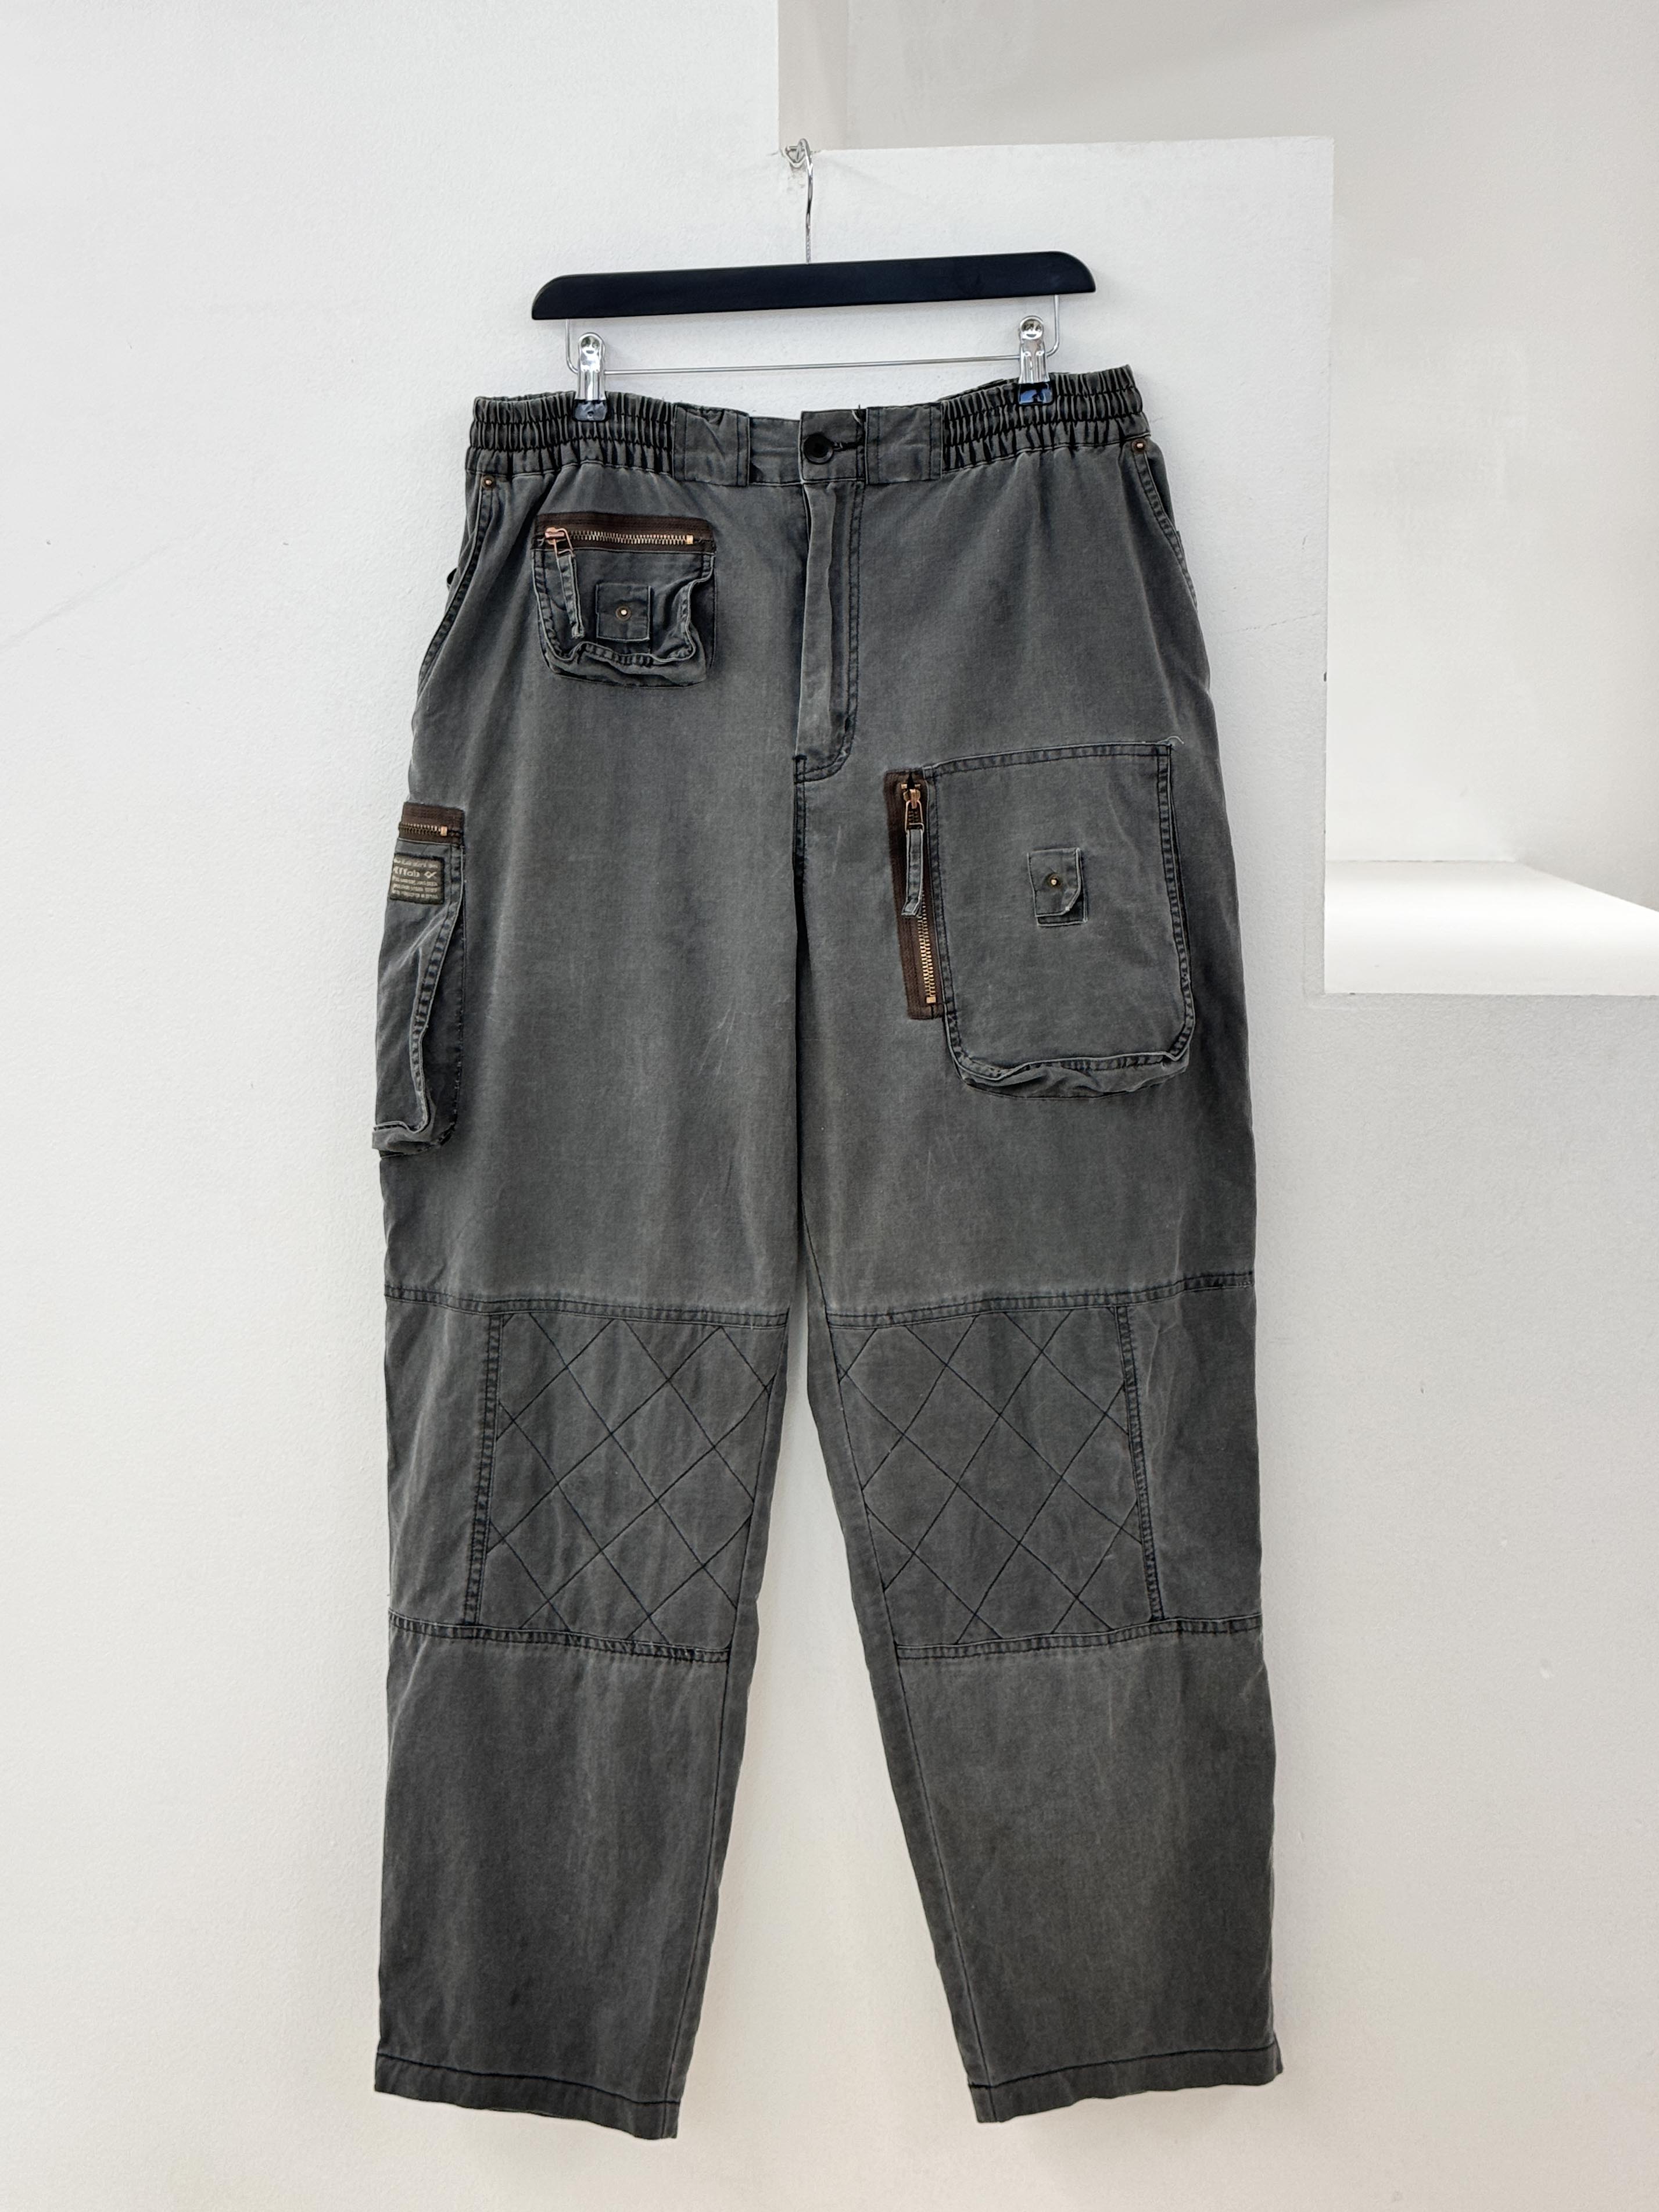 Vintage cargo pants 34inch